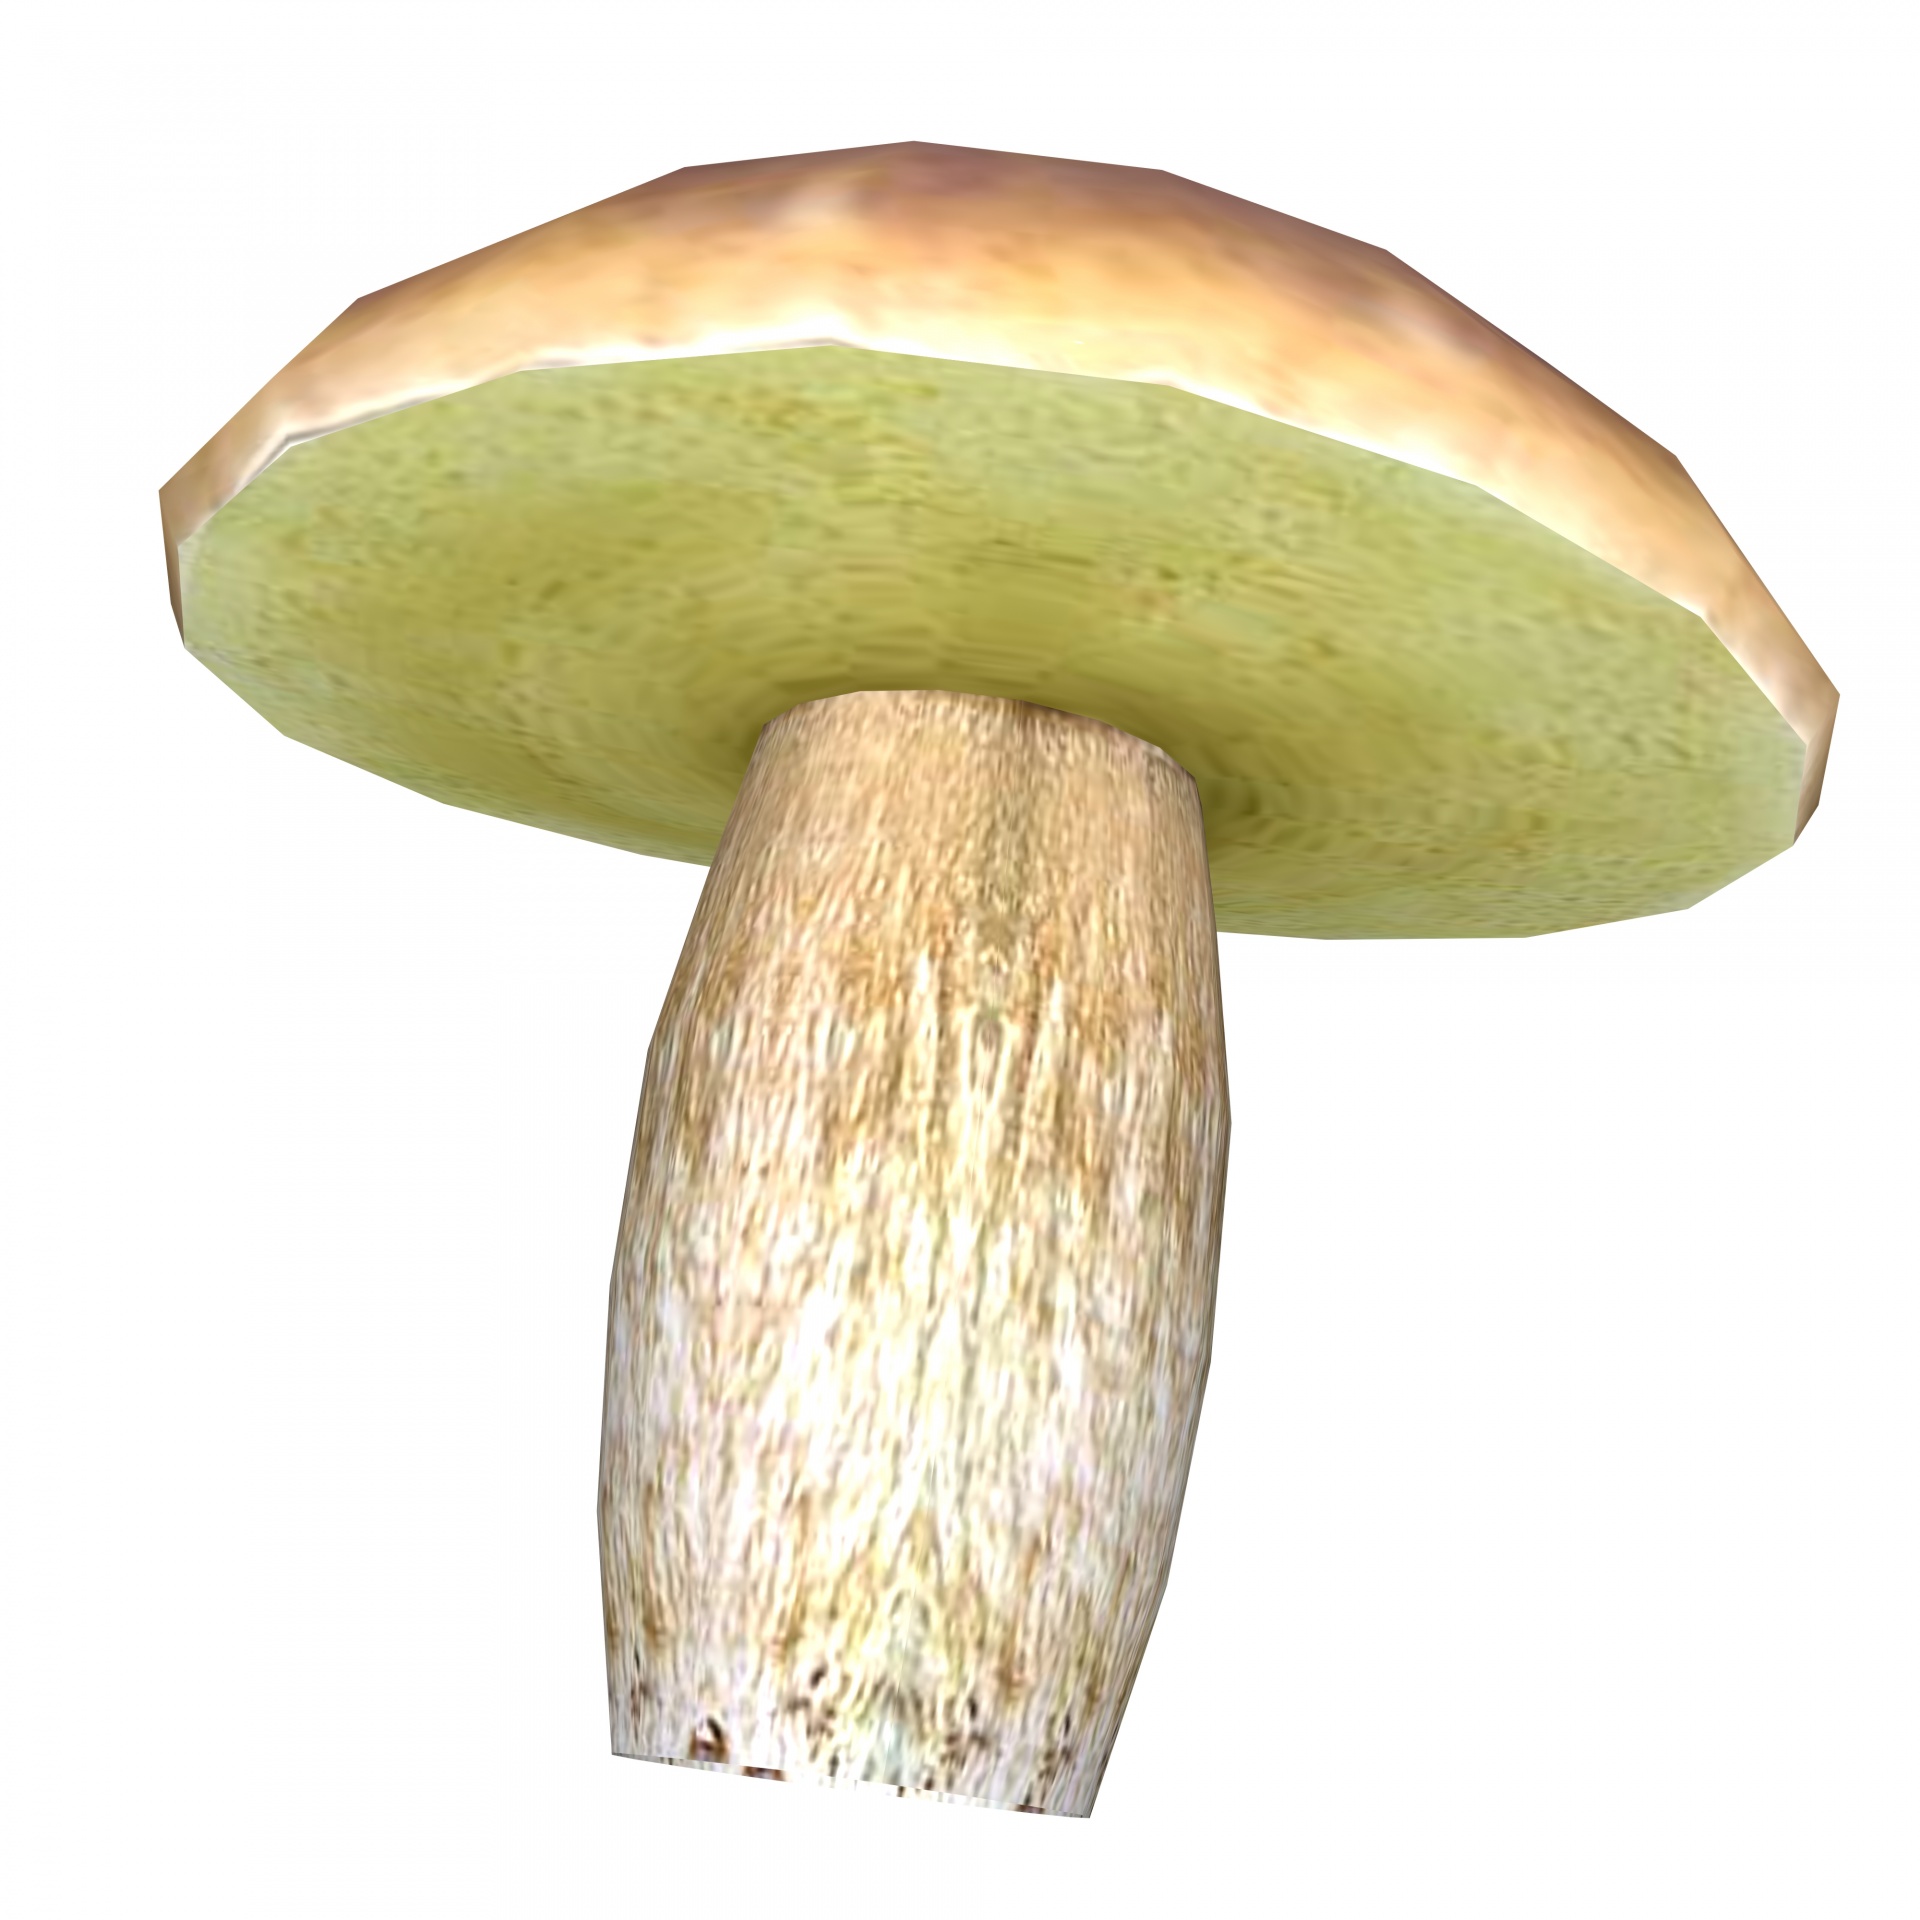 drawing boletus mushroom free photo